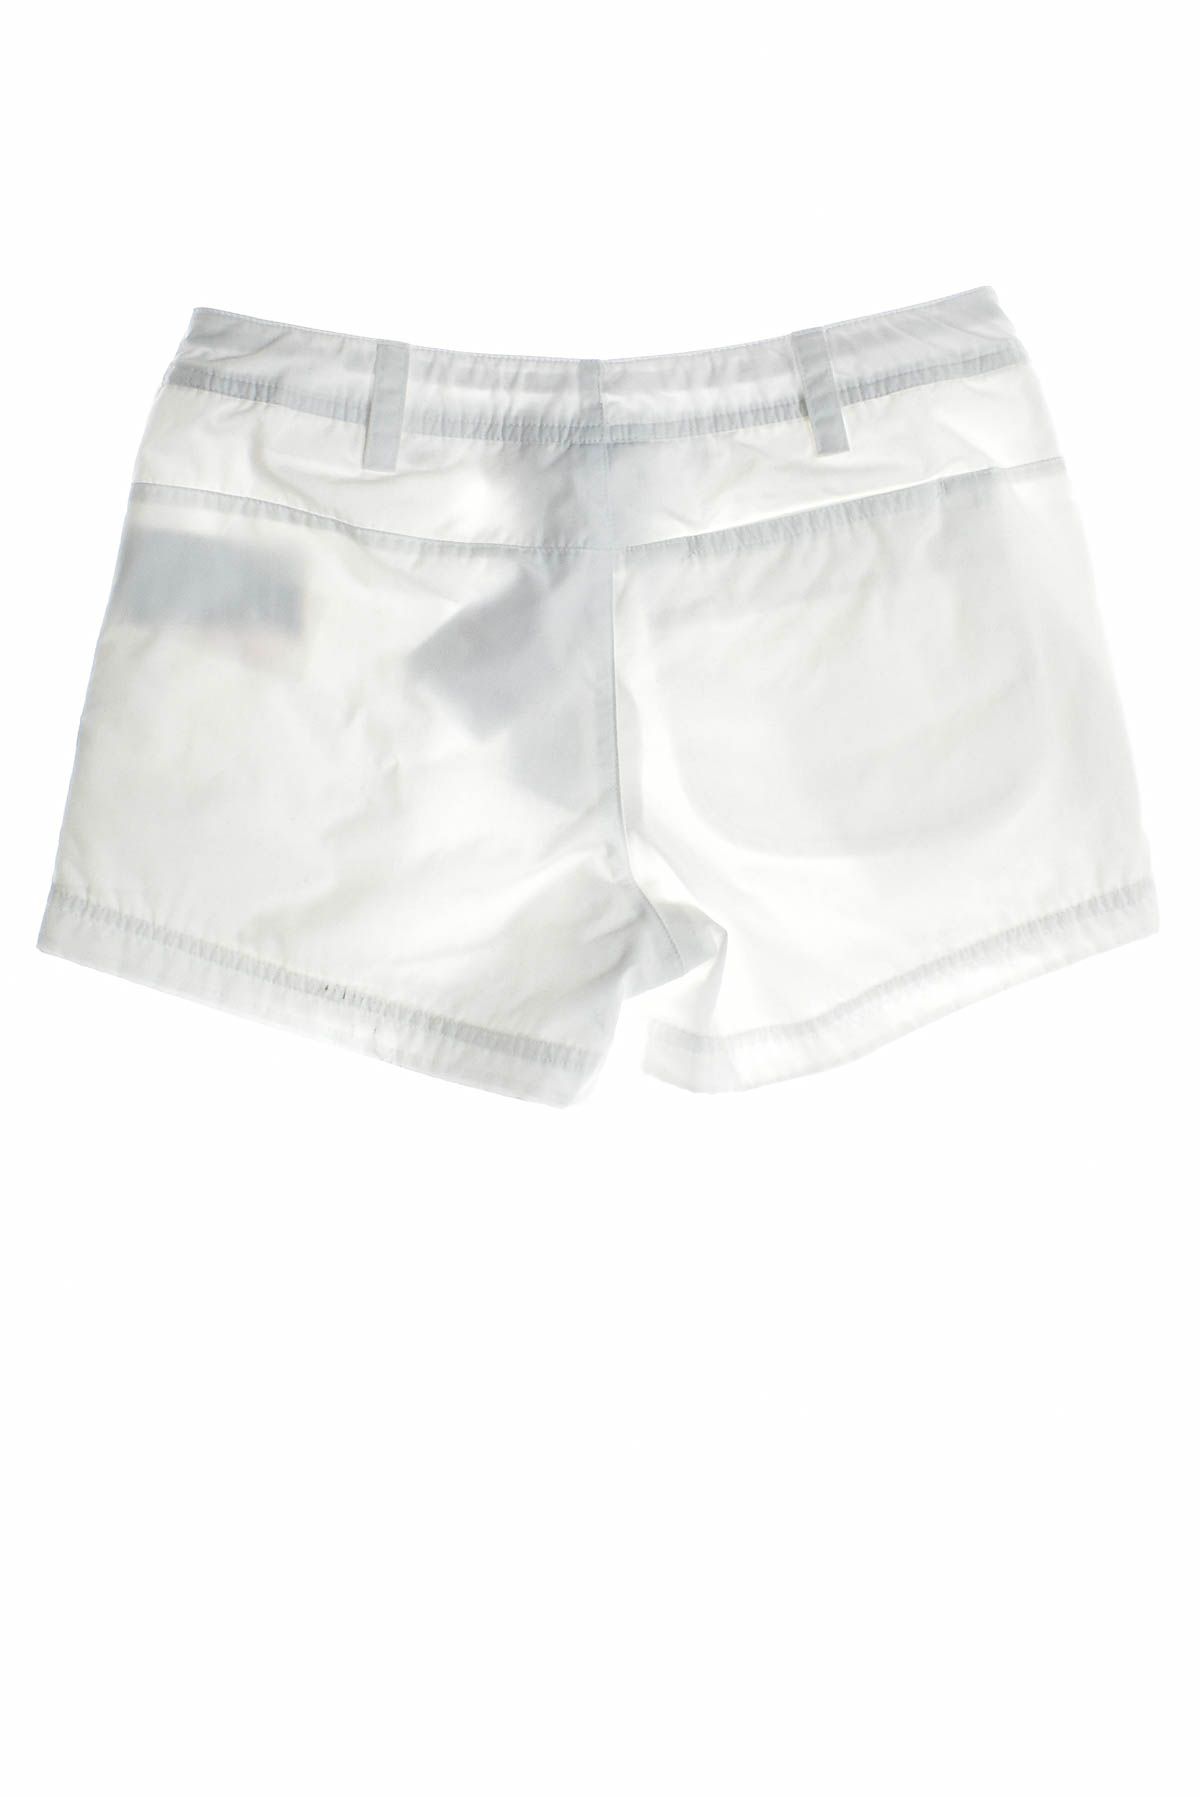 Shorts for girls - NIKE - 1